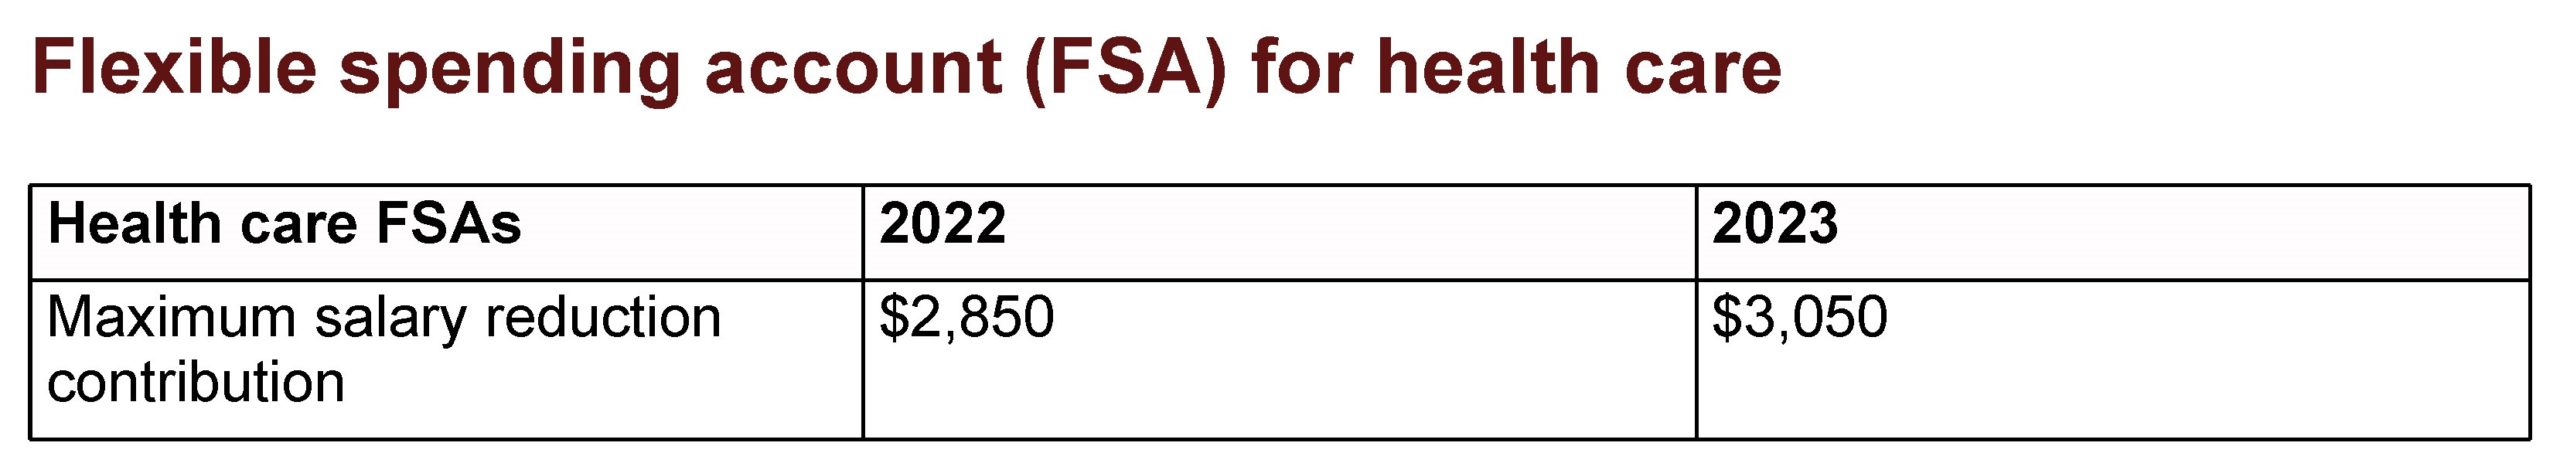 Flexible Spending Account (FSA) For Health Care